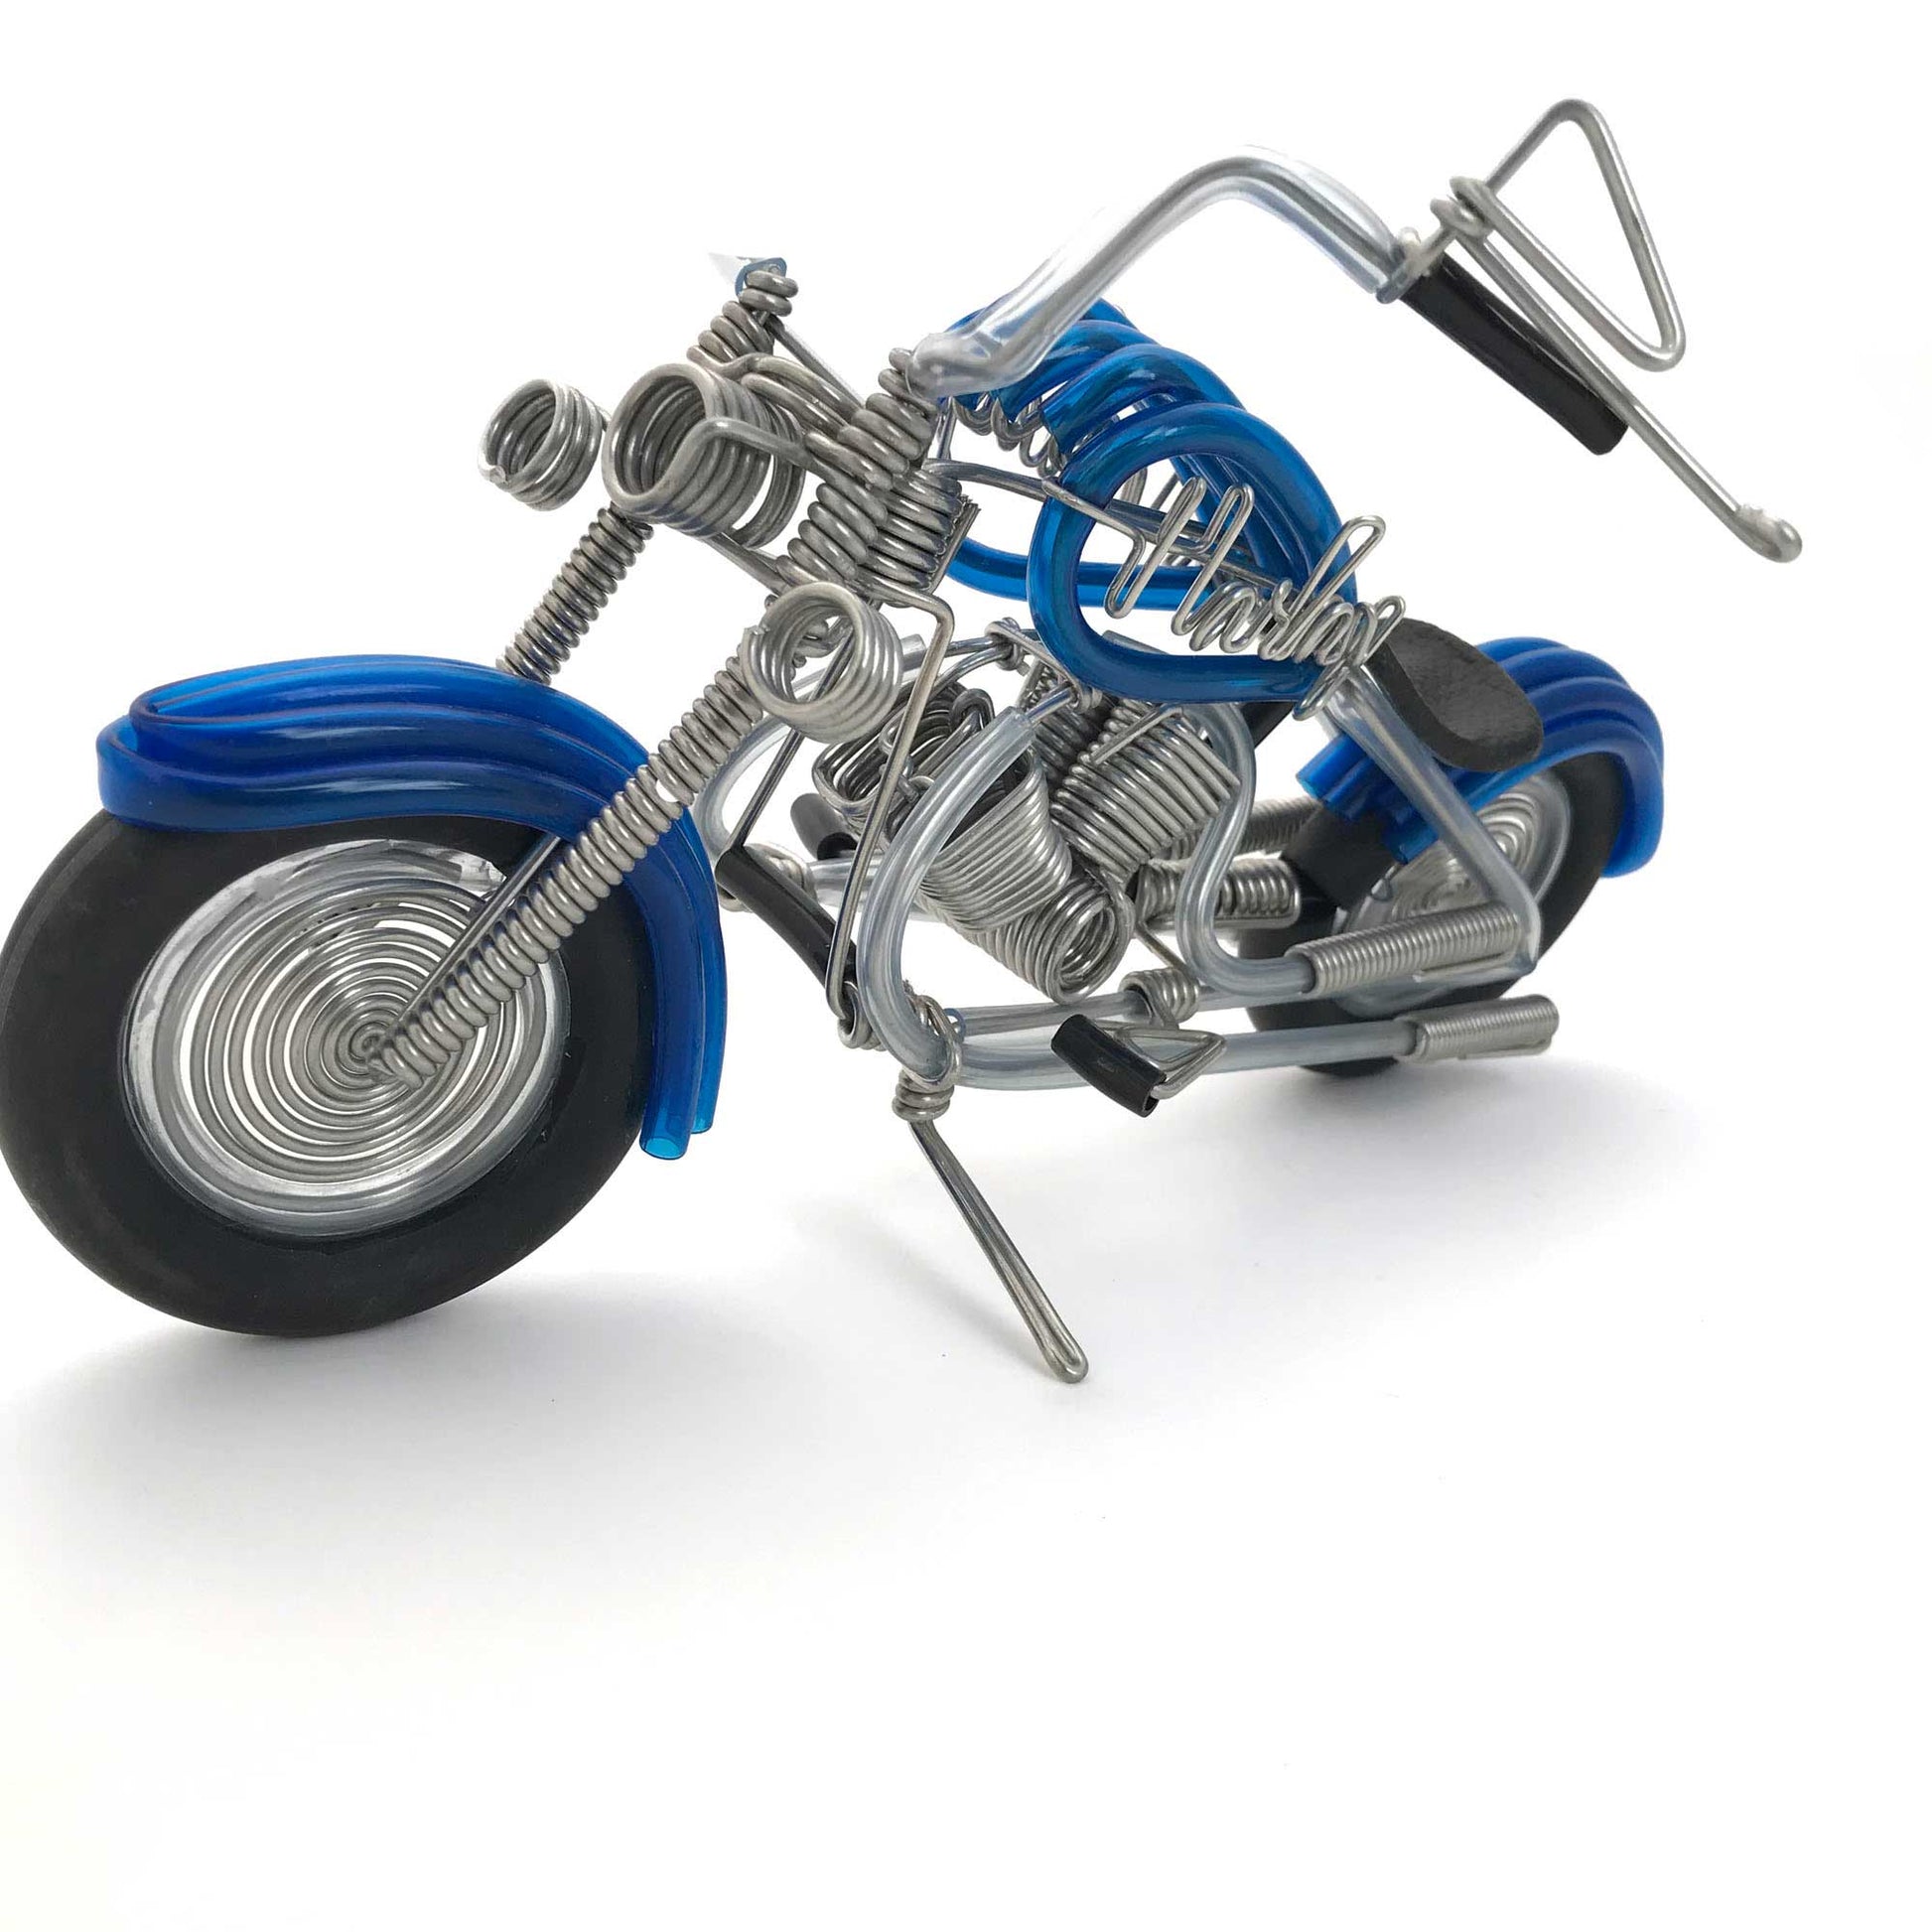 Miniature Wire Art cruiser motor bike hand-crafted from aluminium wire